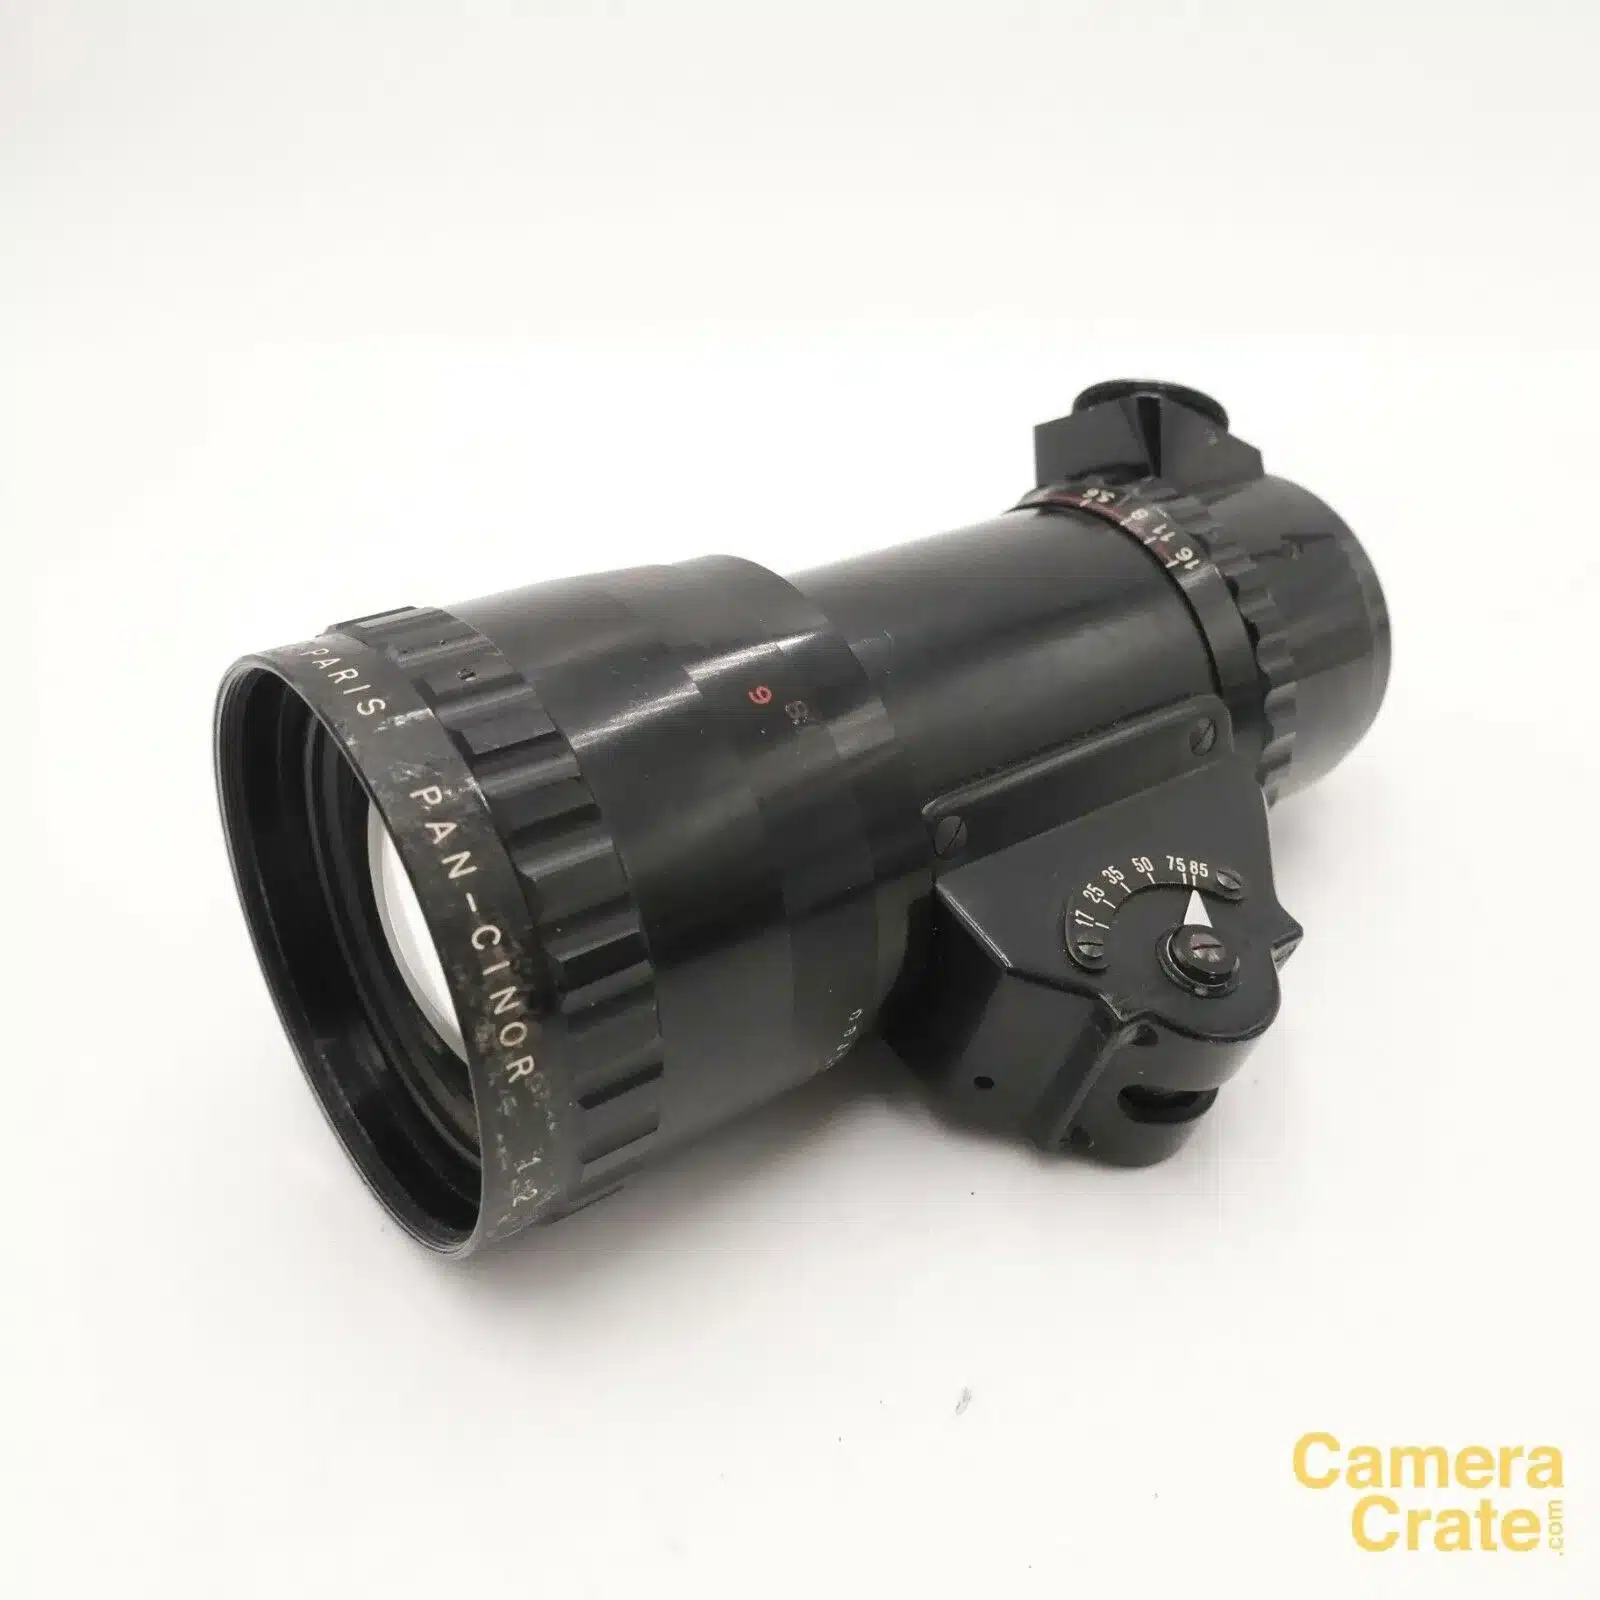 SOM Berthiot Pan Cinor 17-85mm f/2 C Mount Cine Lens - CameraCrate.com -  Super 8 & 8mm Camera Specialists